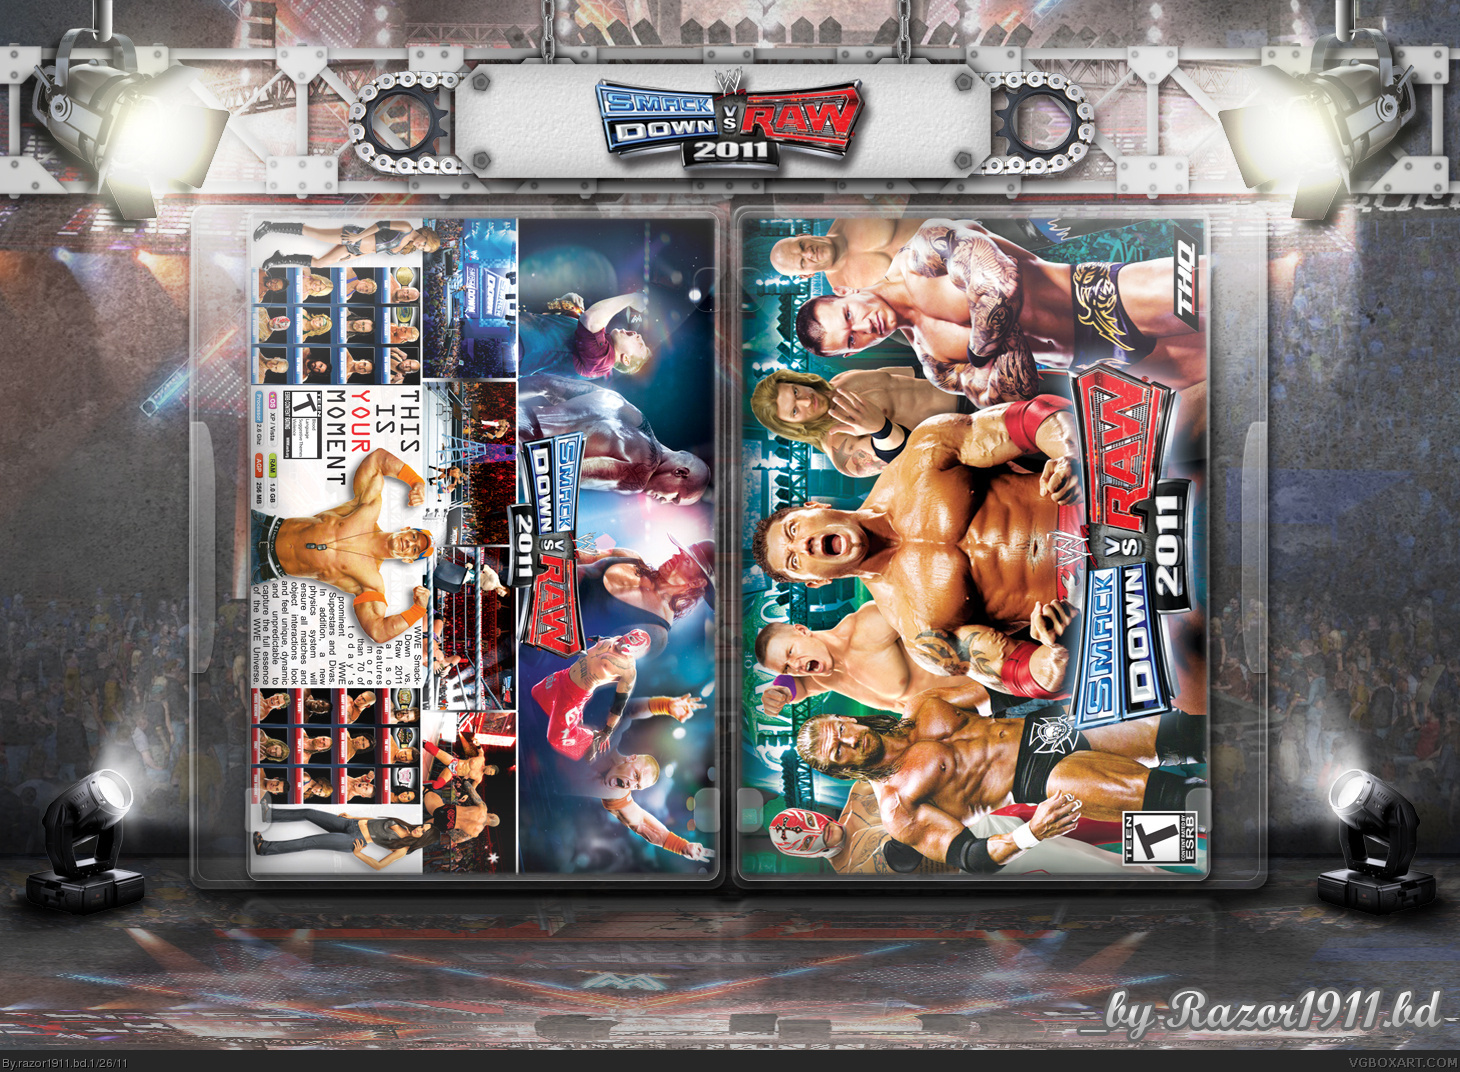 Smackdown vs Raw 2011 box cover